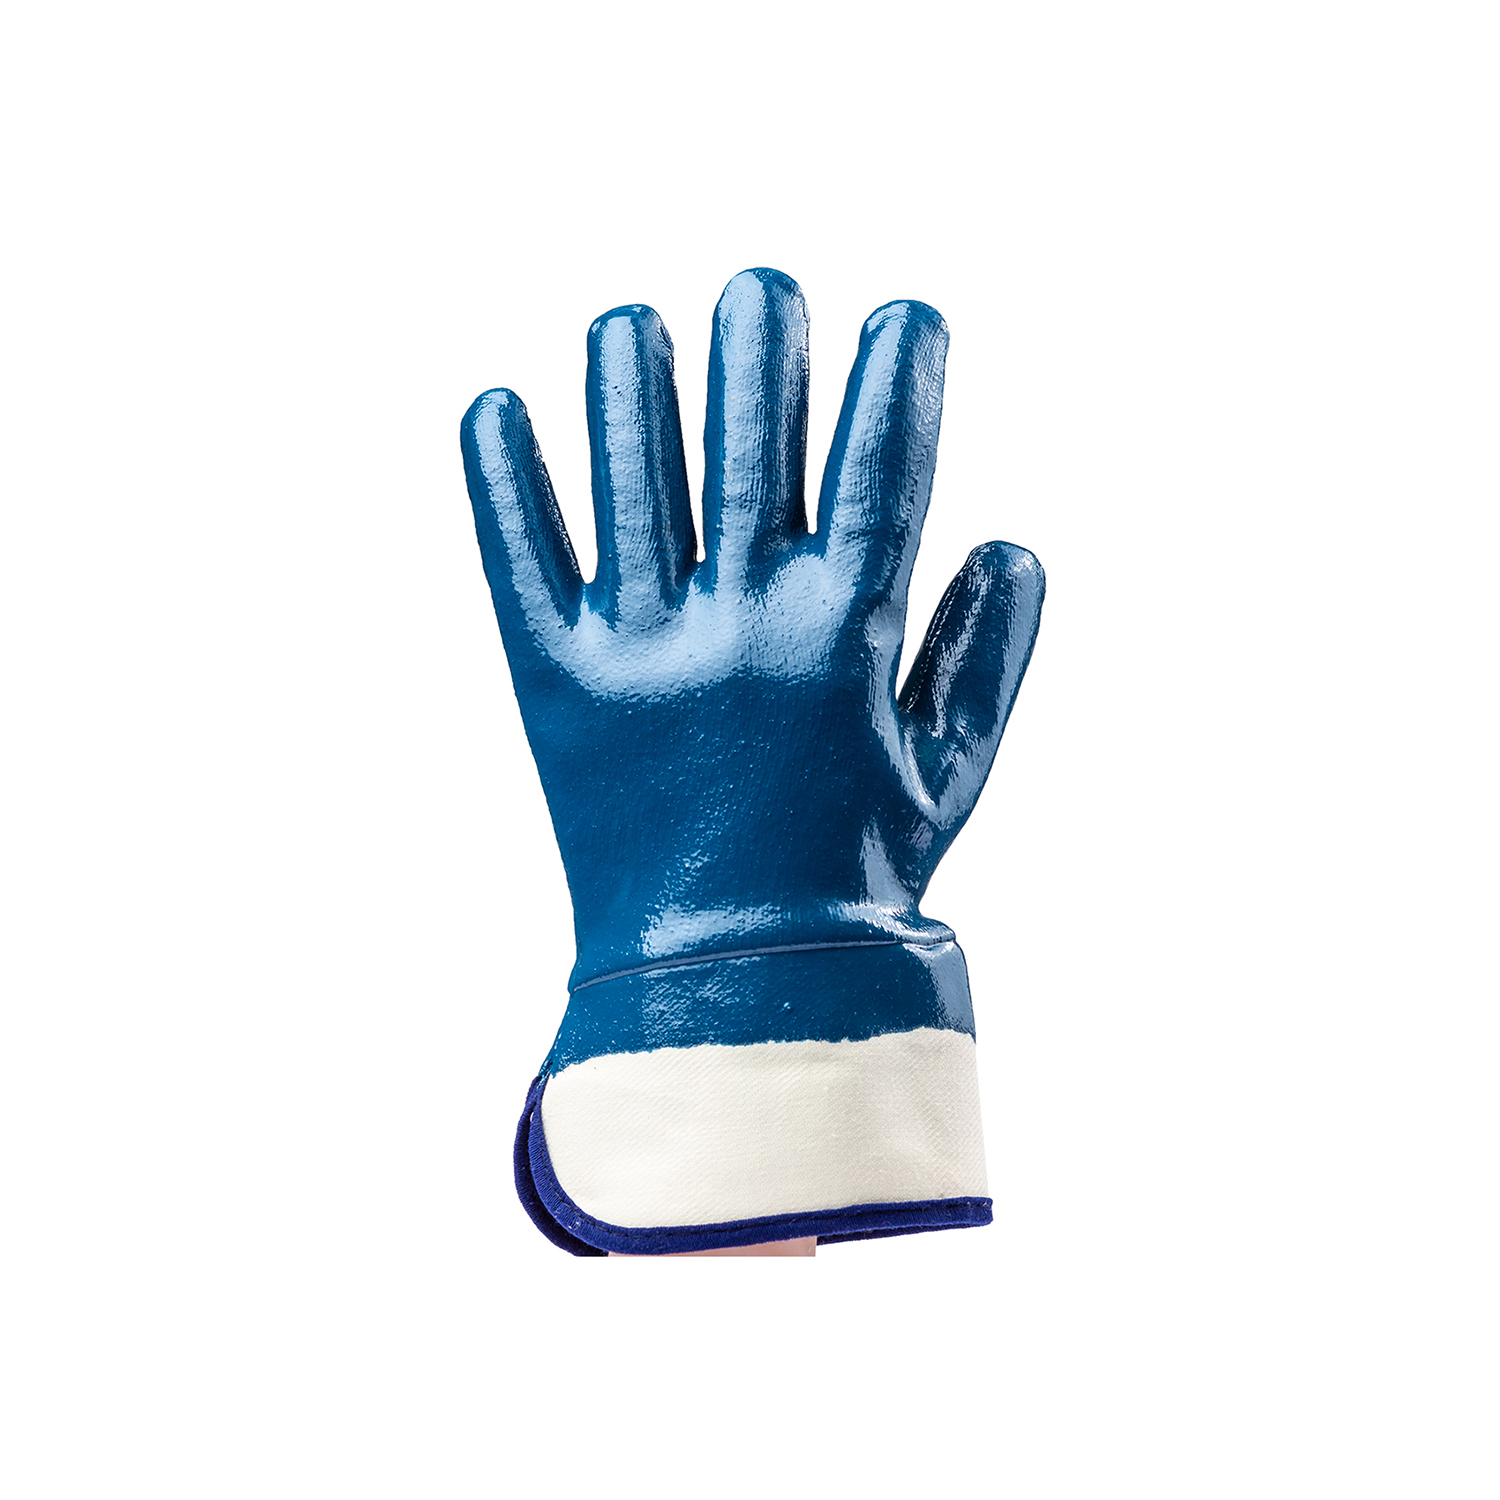 Oil-resistant glove